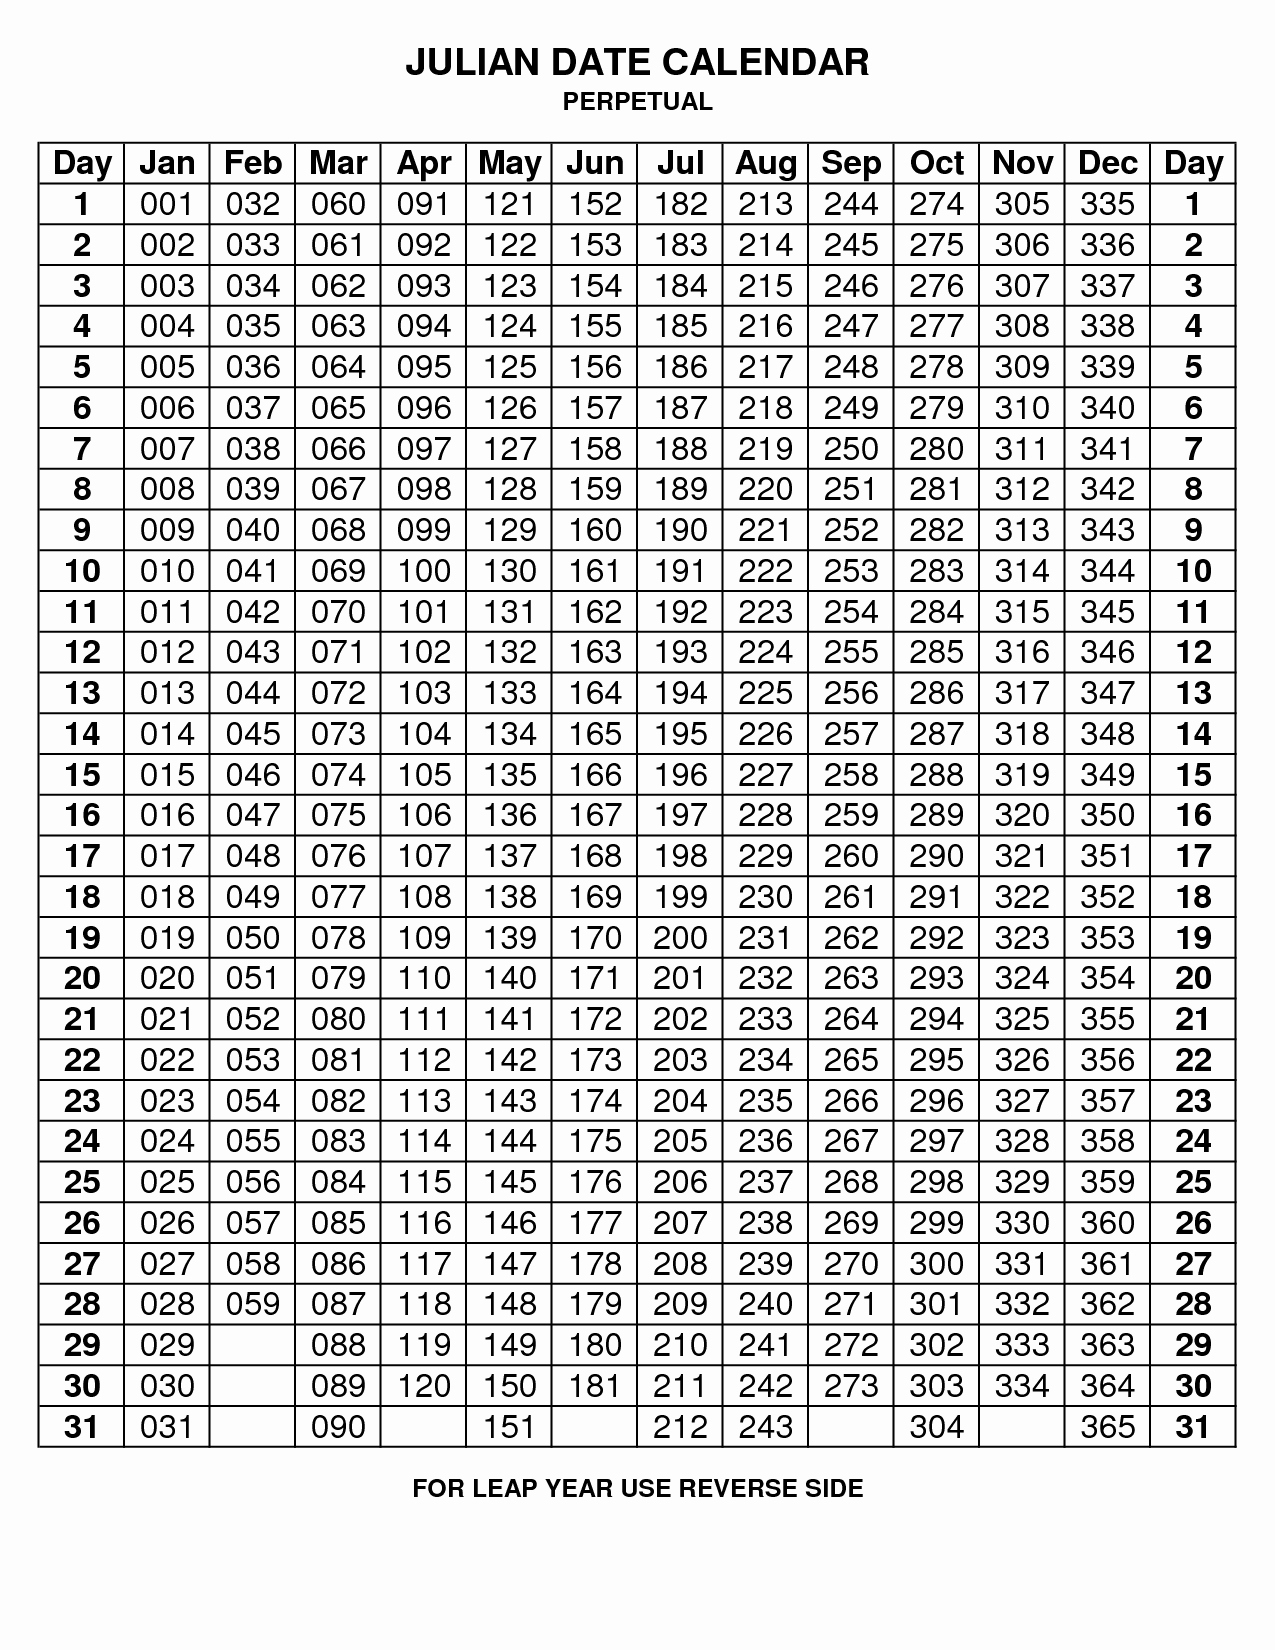 Depo Provera Perpetual Calendar To Print - Calendar  Depo Progesteron Calendar 2021